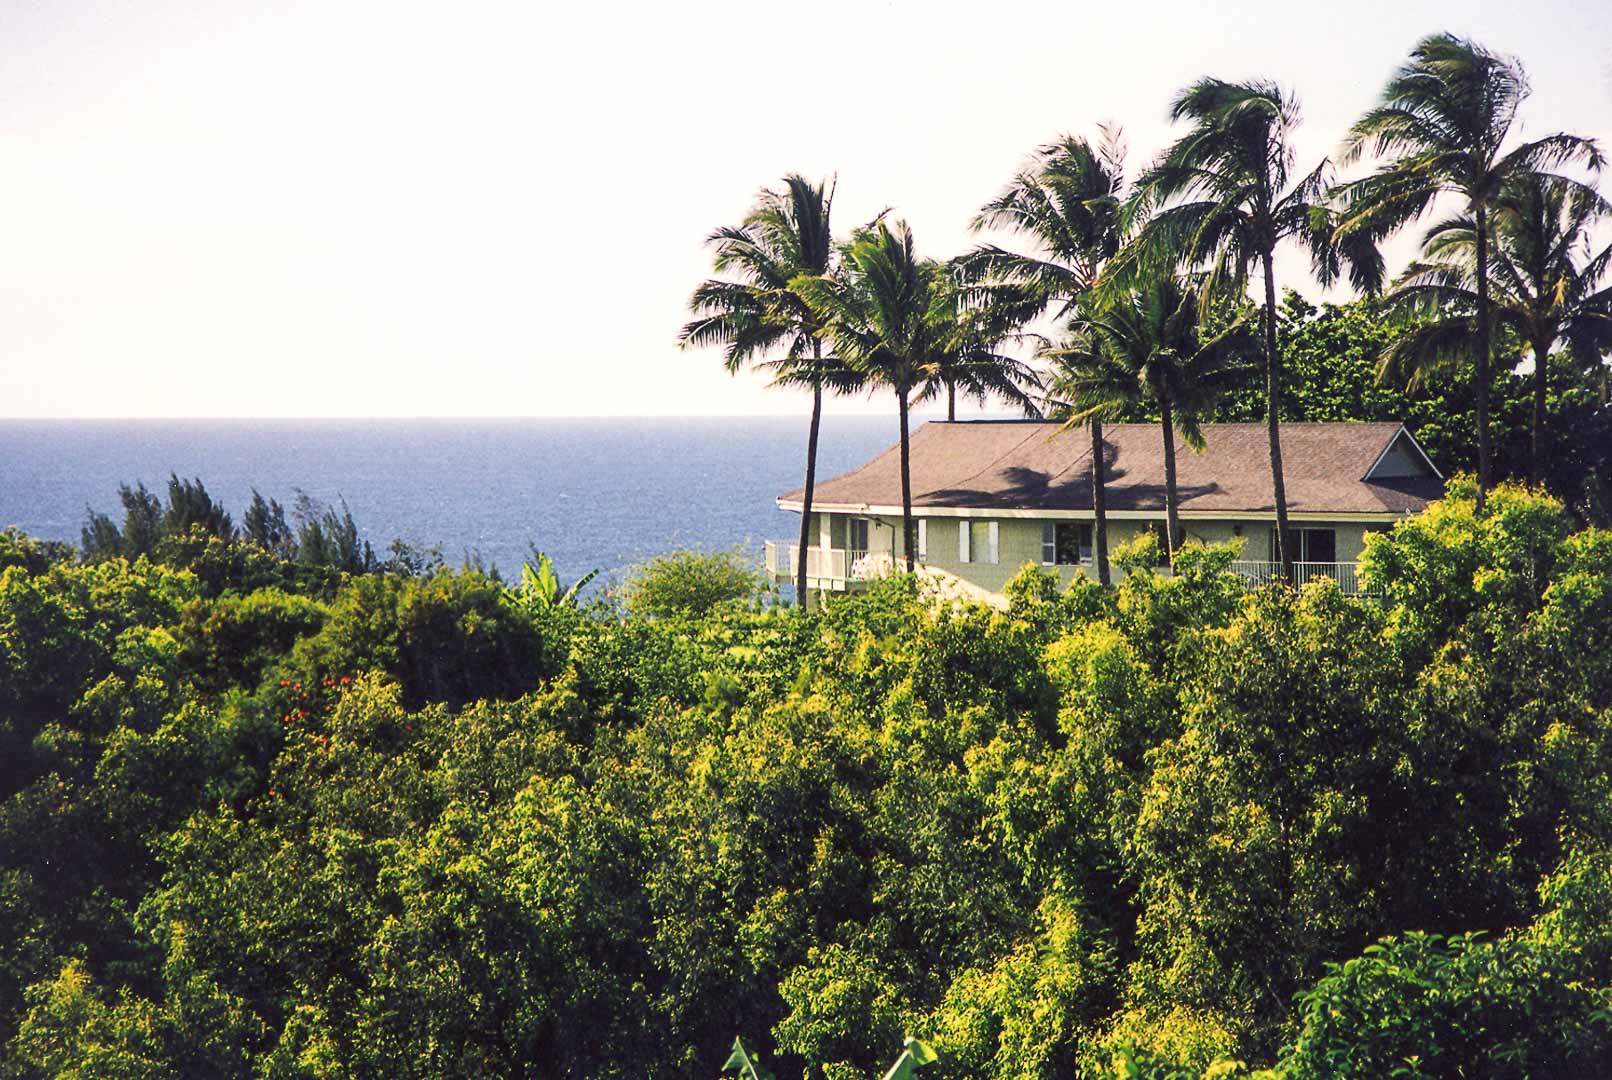 A quaint ocean view from VRI's Alii Kai Resort in Hawaii